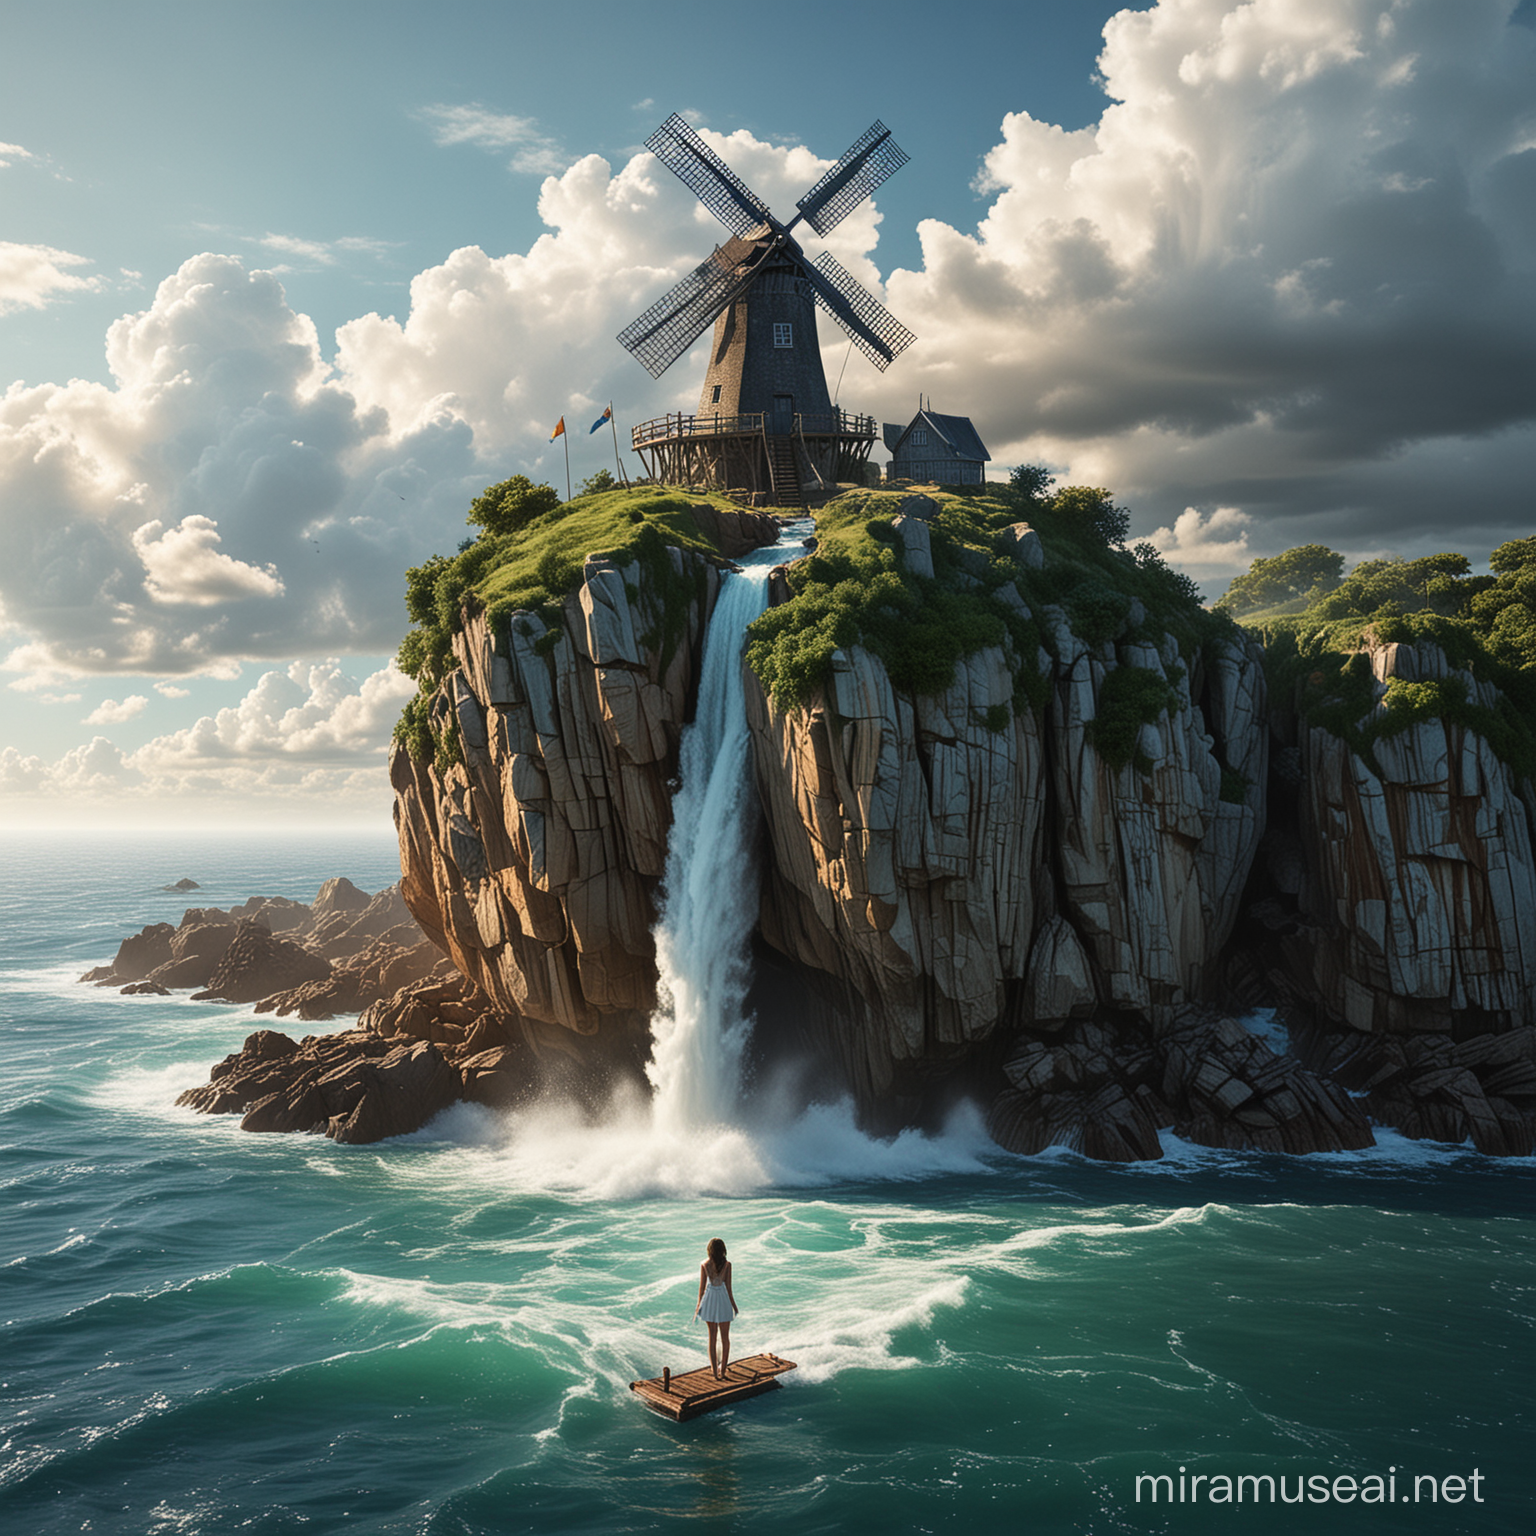 Surreal Smartphone Portal to Floating Island Fantasy World